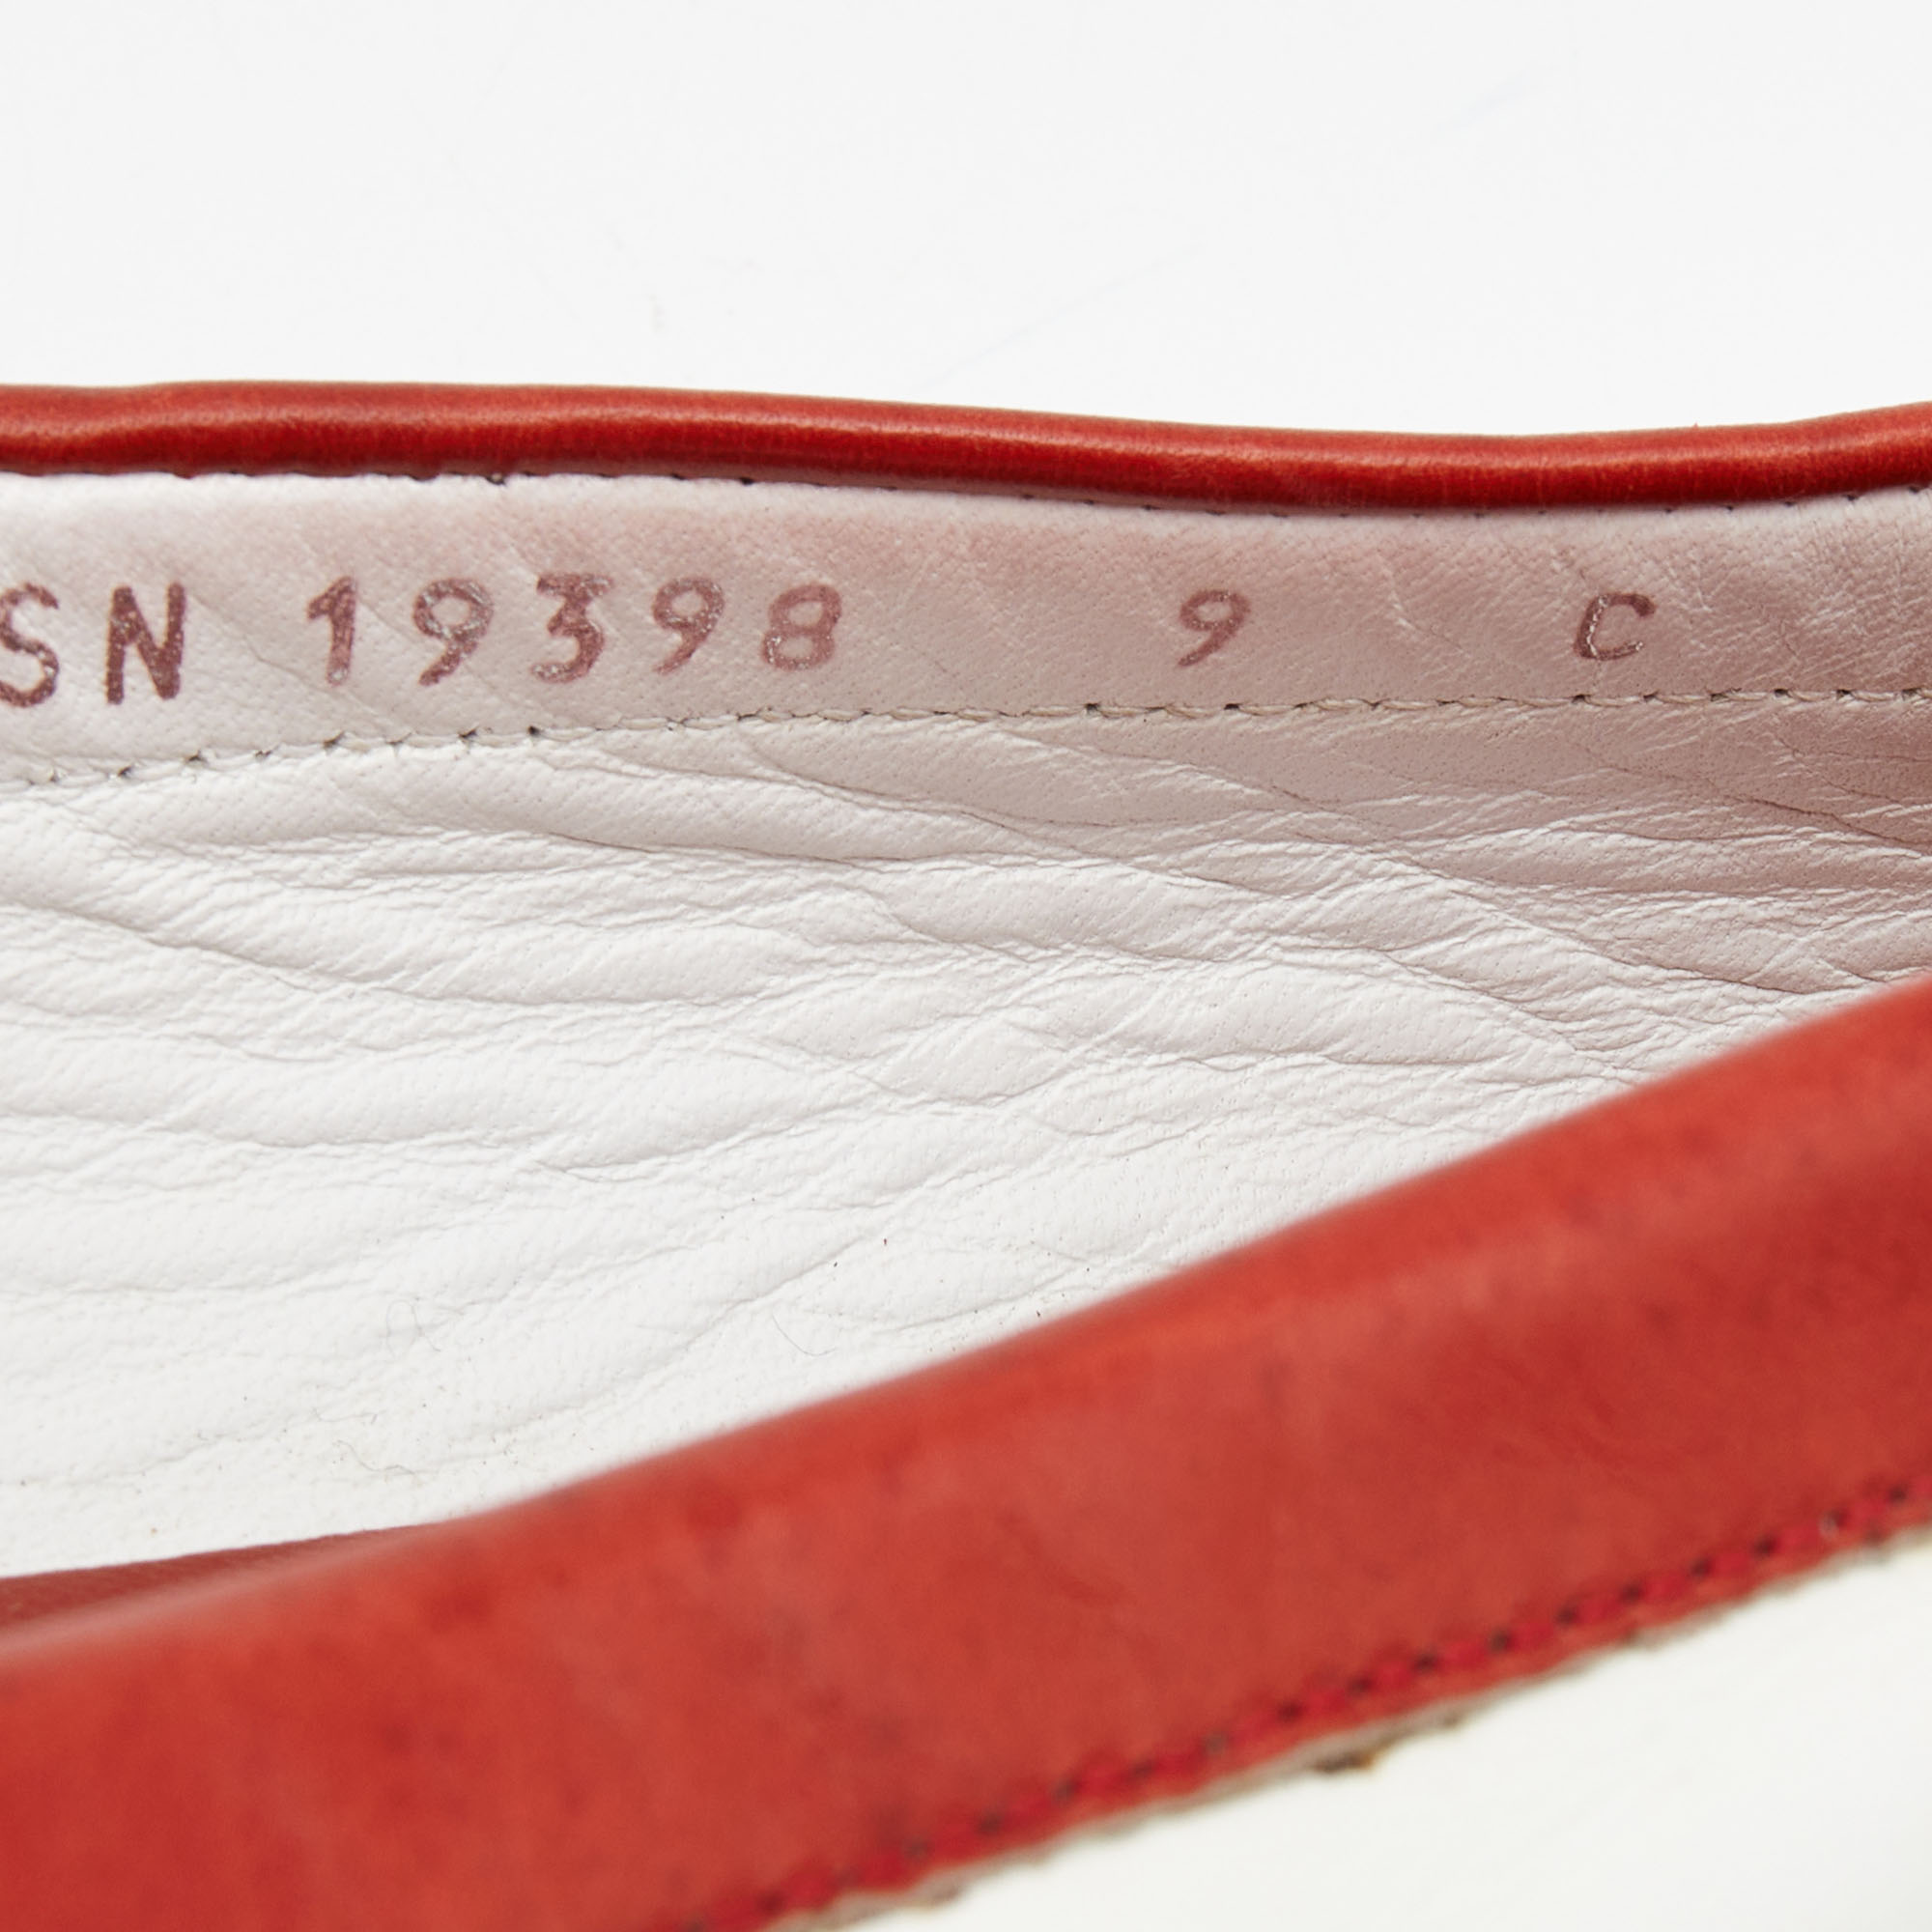 Salvatore Ferragamo White/Red Leather Bow Ballet Flats Size 39.5